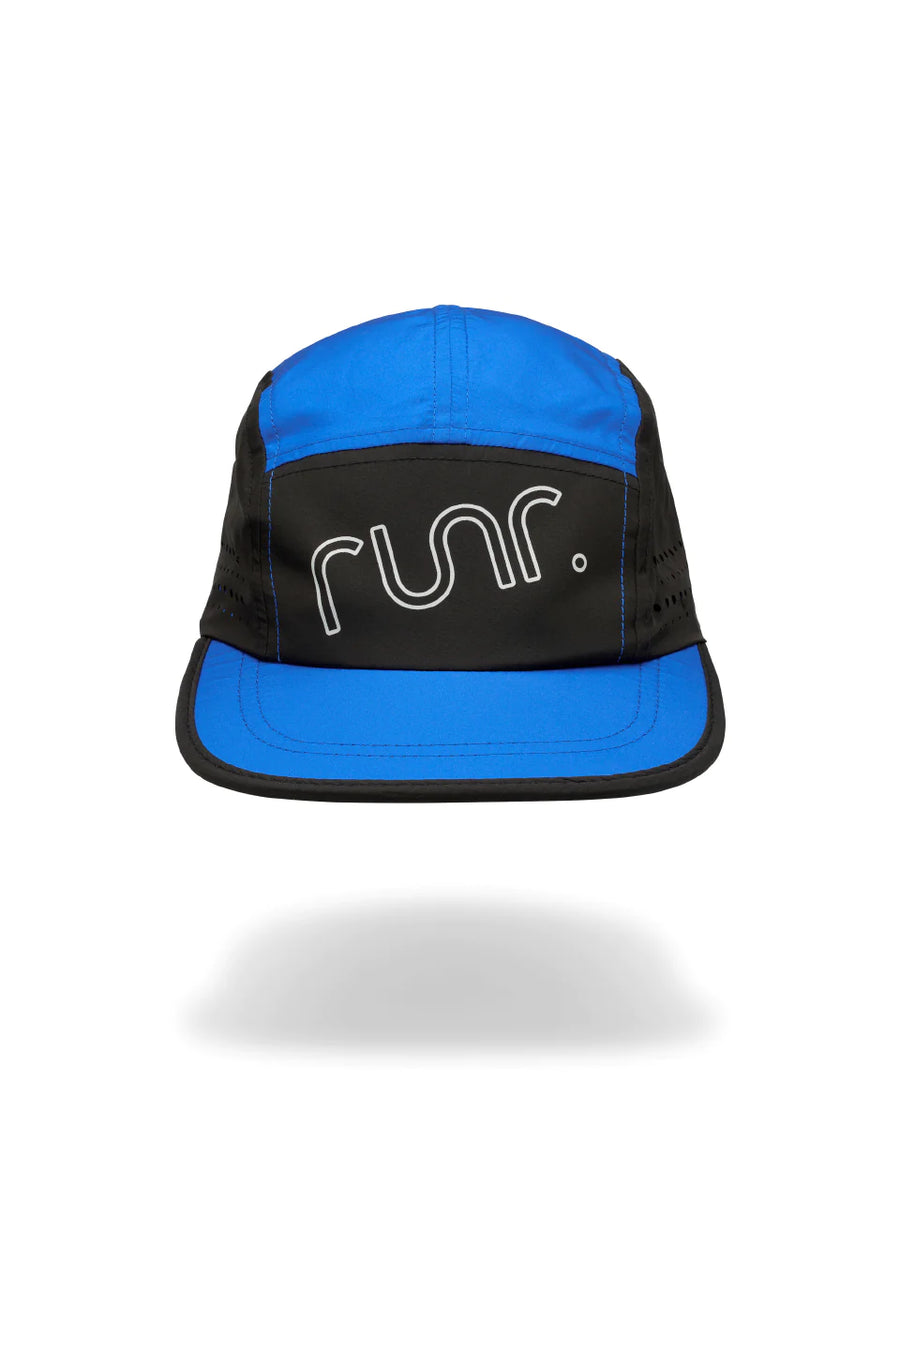 Runr Helsinki Technical Running Hat